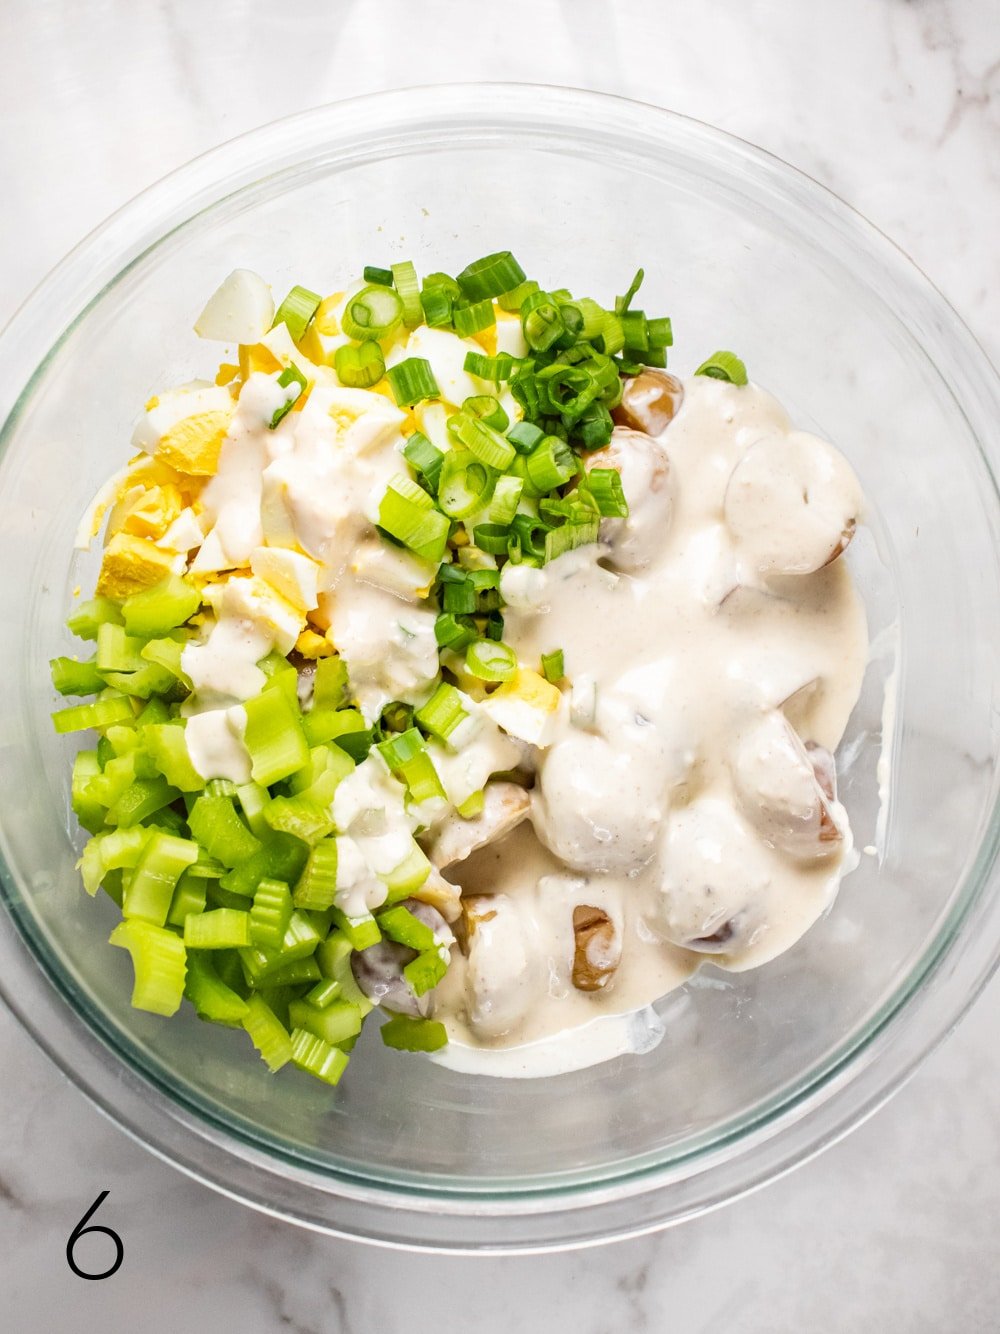 potato salad ingredients in a mixing bowl with yogurt